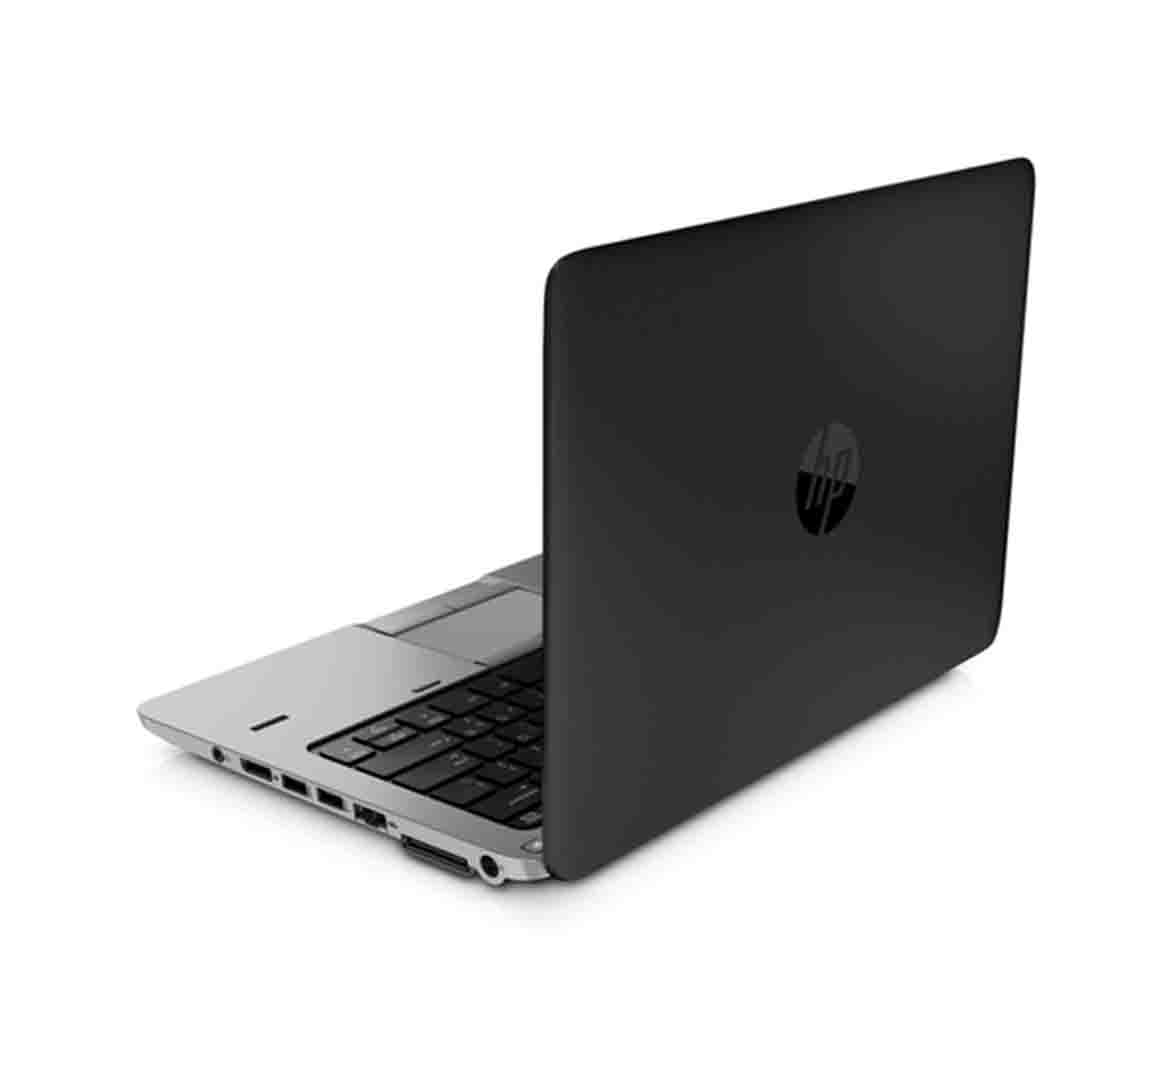 HP EliteBook 820 G1 Business Laptop, Intel Core i3-4th Generation CPU, 8GB RAM, 500GB HDD, 12.5 inch Display, Windows 10 Pro, Refurbished Laptop